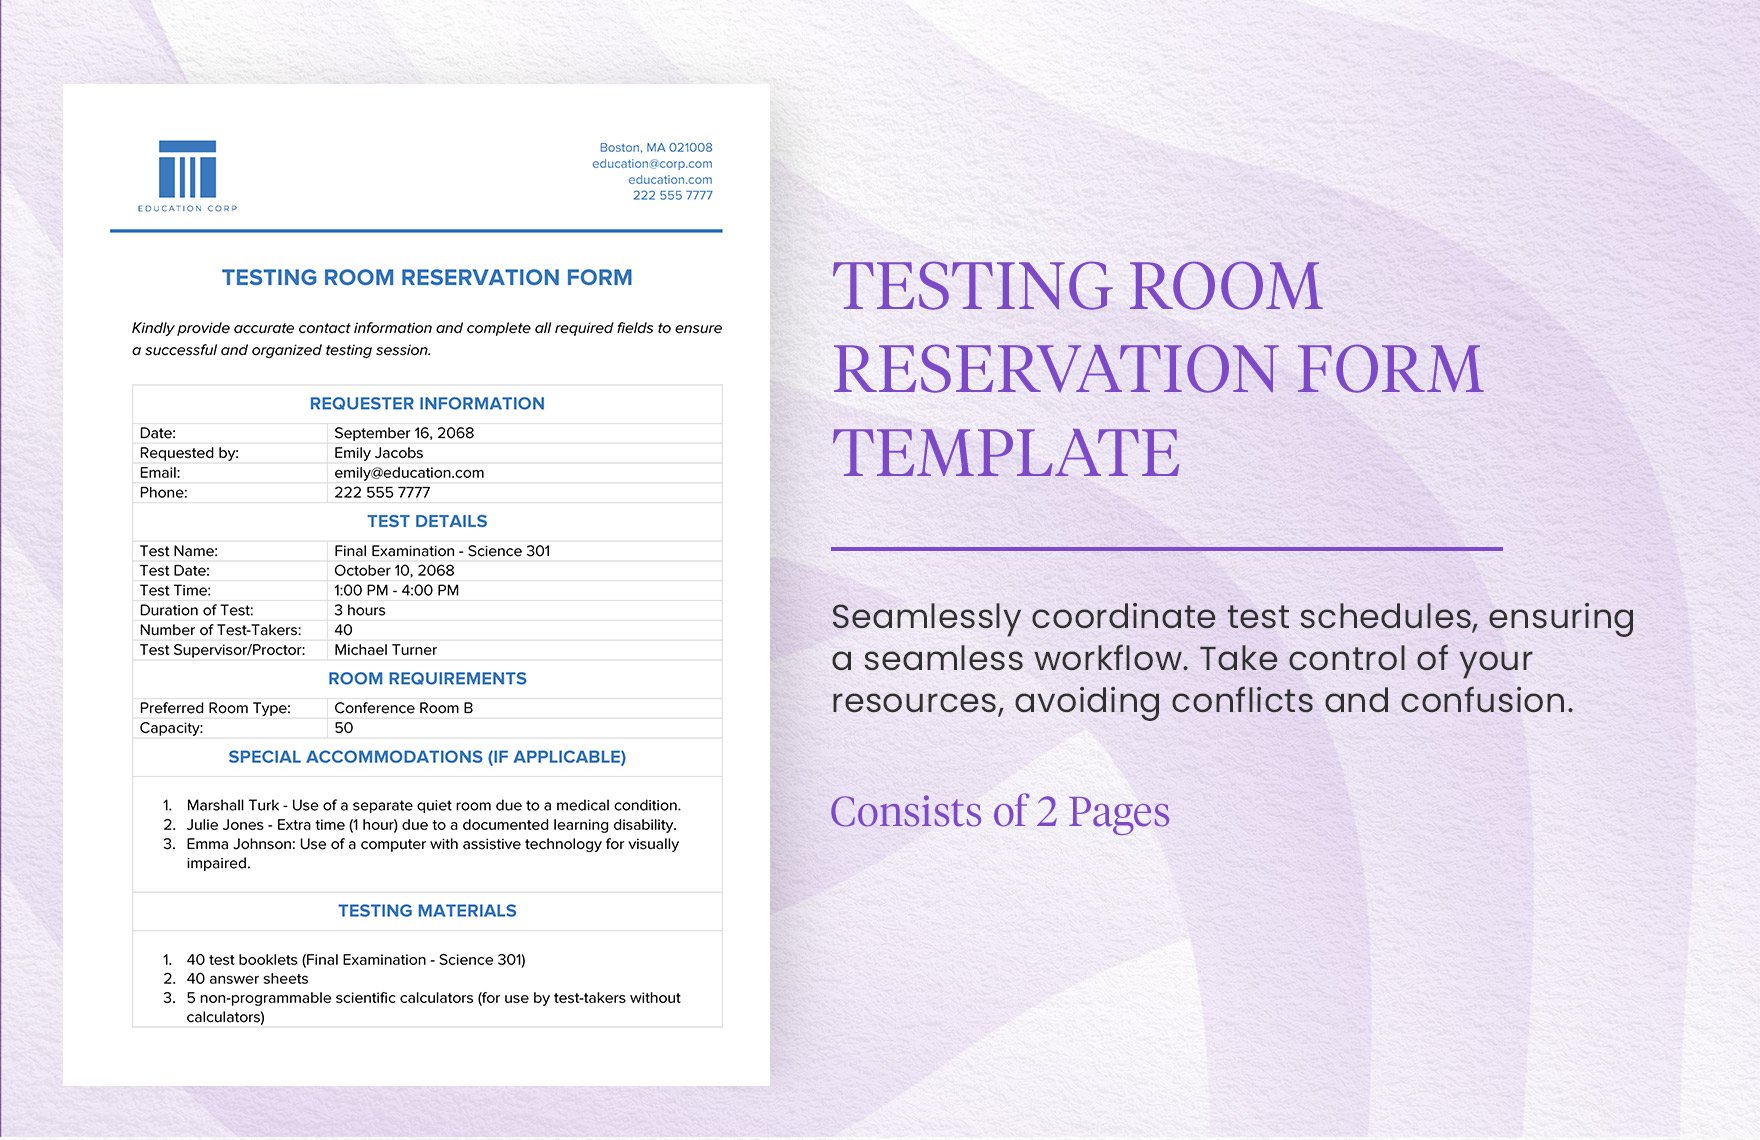 Testing Room Reservation Form Template